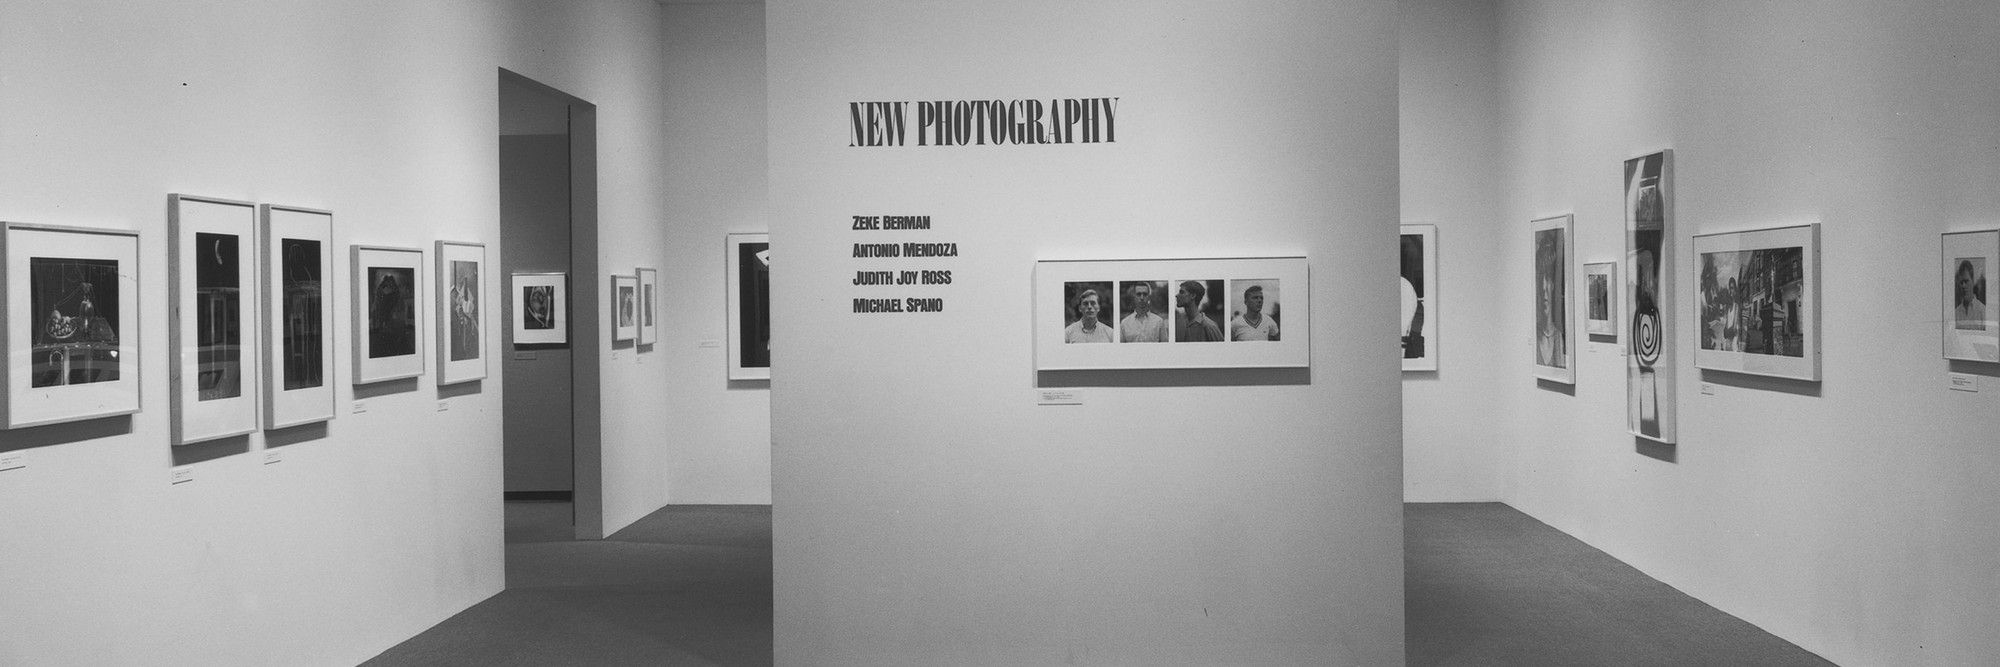 Installation view of New Photography: Zeke Berman, Antonio Mendoza, Judith Joy Ross, and Michael Spano (August 22–December 3, 1985). Museum of Modern Art, New York. Photo by Mali Olatunji